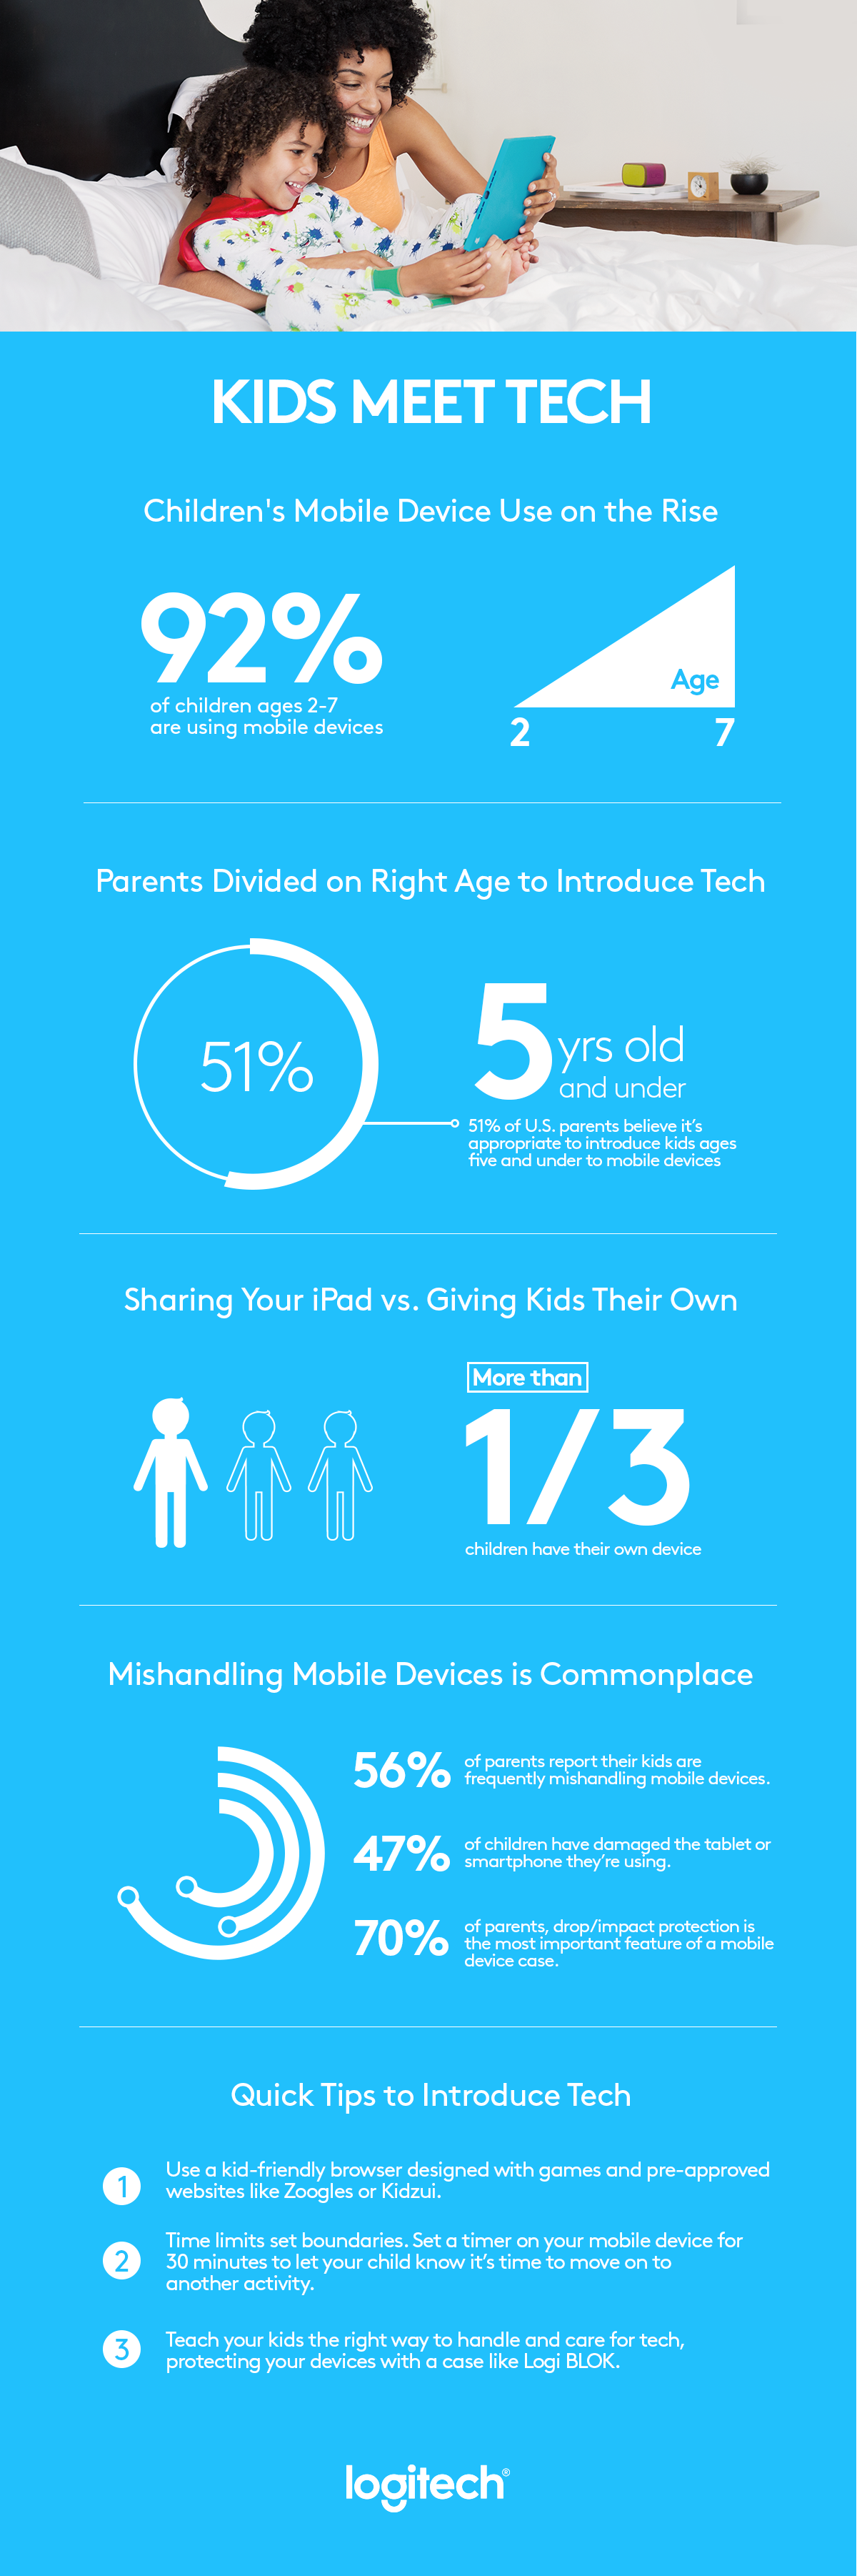 KidsMeetTech_Infographic_US_1